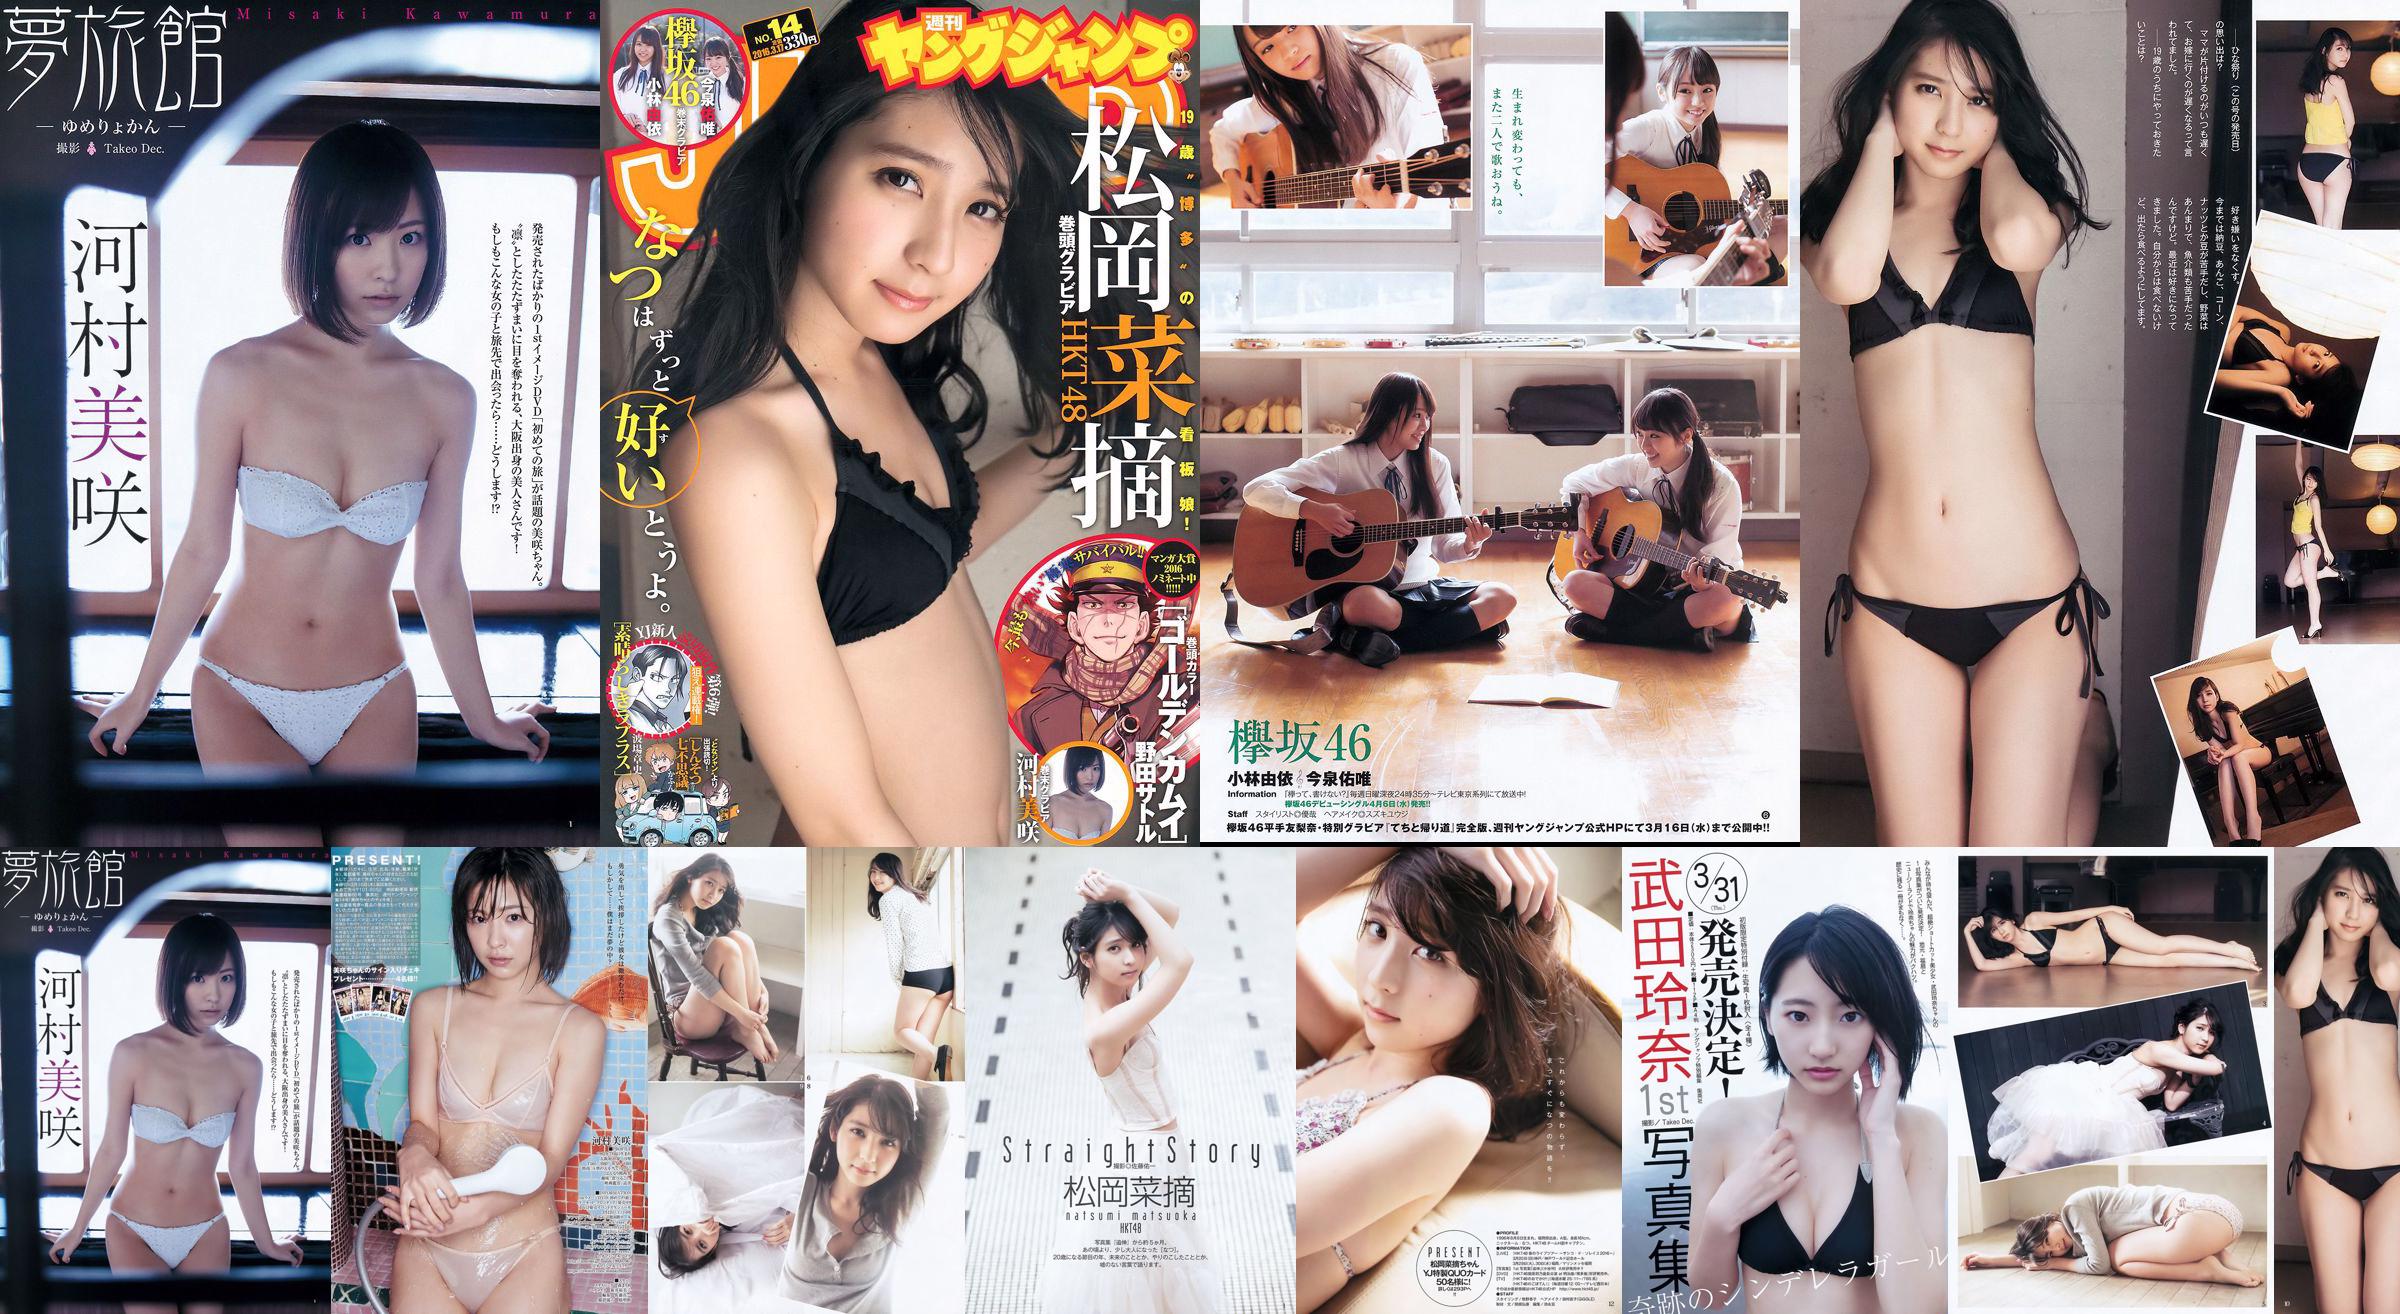 Pilihan Sayur Muraoka Yui Kobayashi Yui Imaizumi Misaki Kawamura [Lompat Muda Mingguan] Majalah Foto No. 14 2016 No.7121f5 Halaman 1